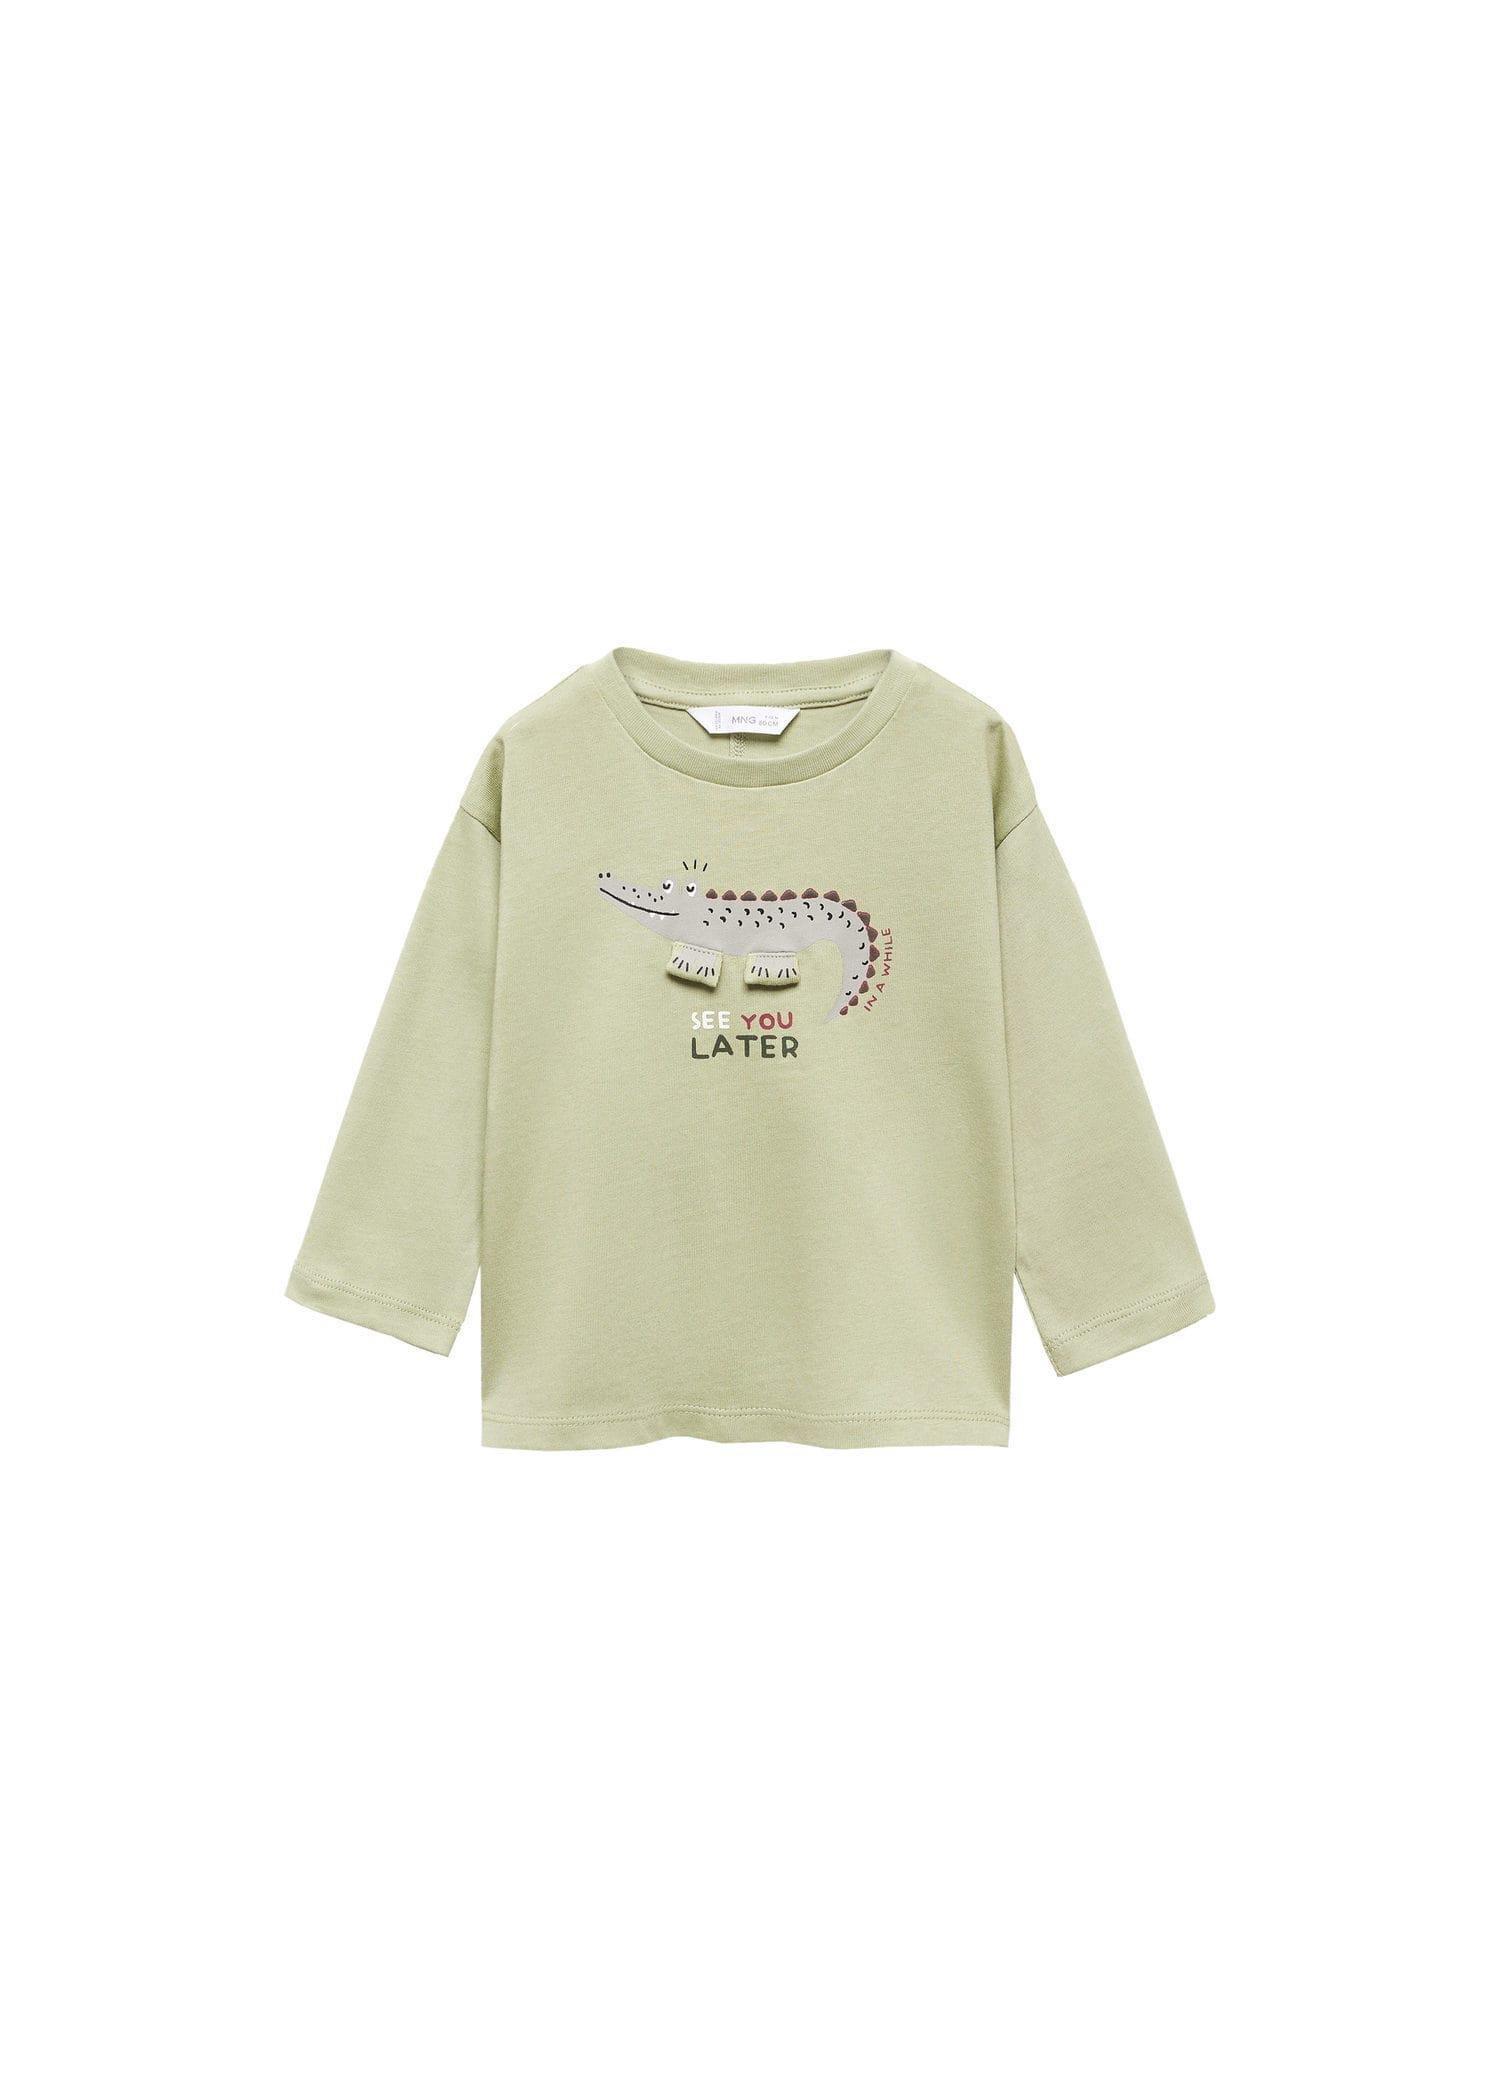 Mango - Green Printed Long-Sleeved T-Shirt, Kids Boys